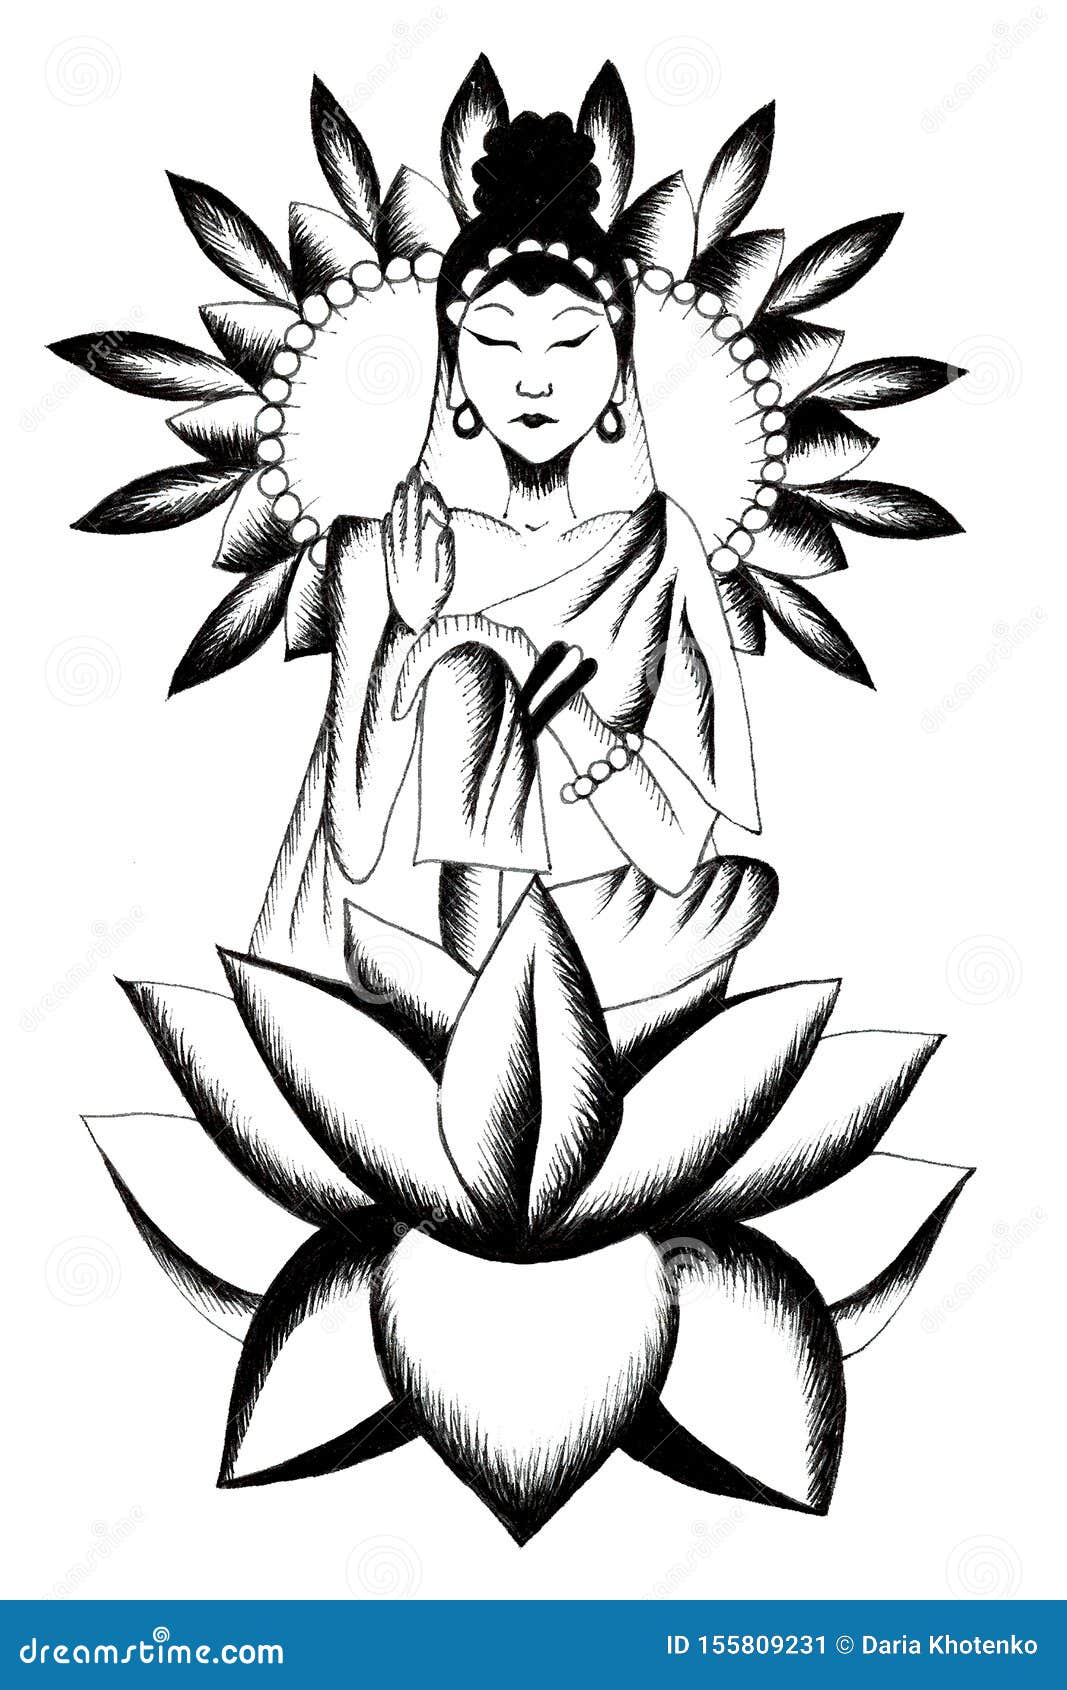 Buddha on flower stock illustration. Illustration of guru - 155809231